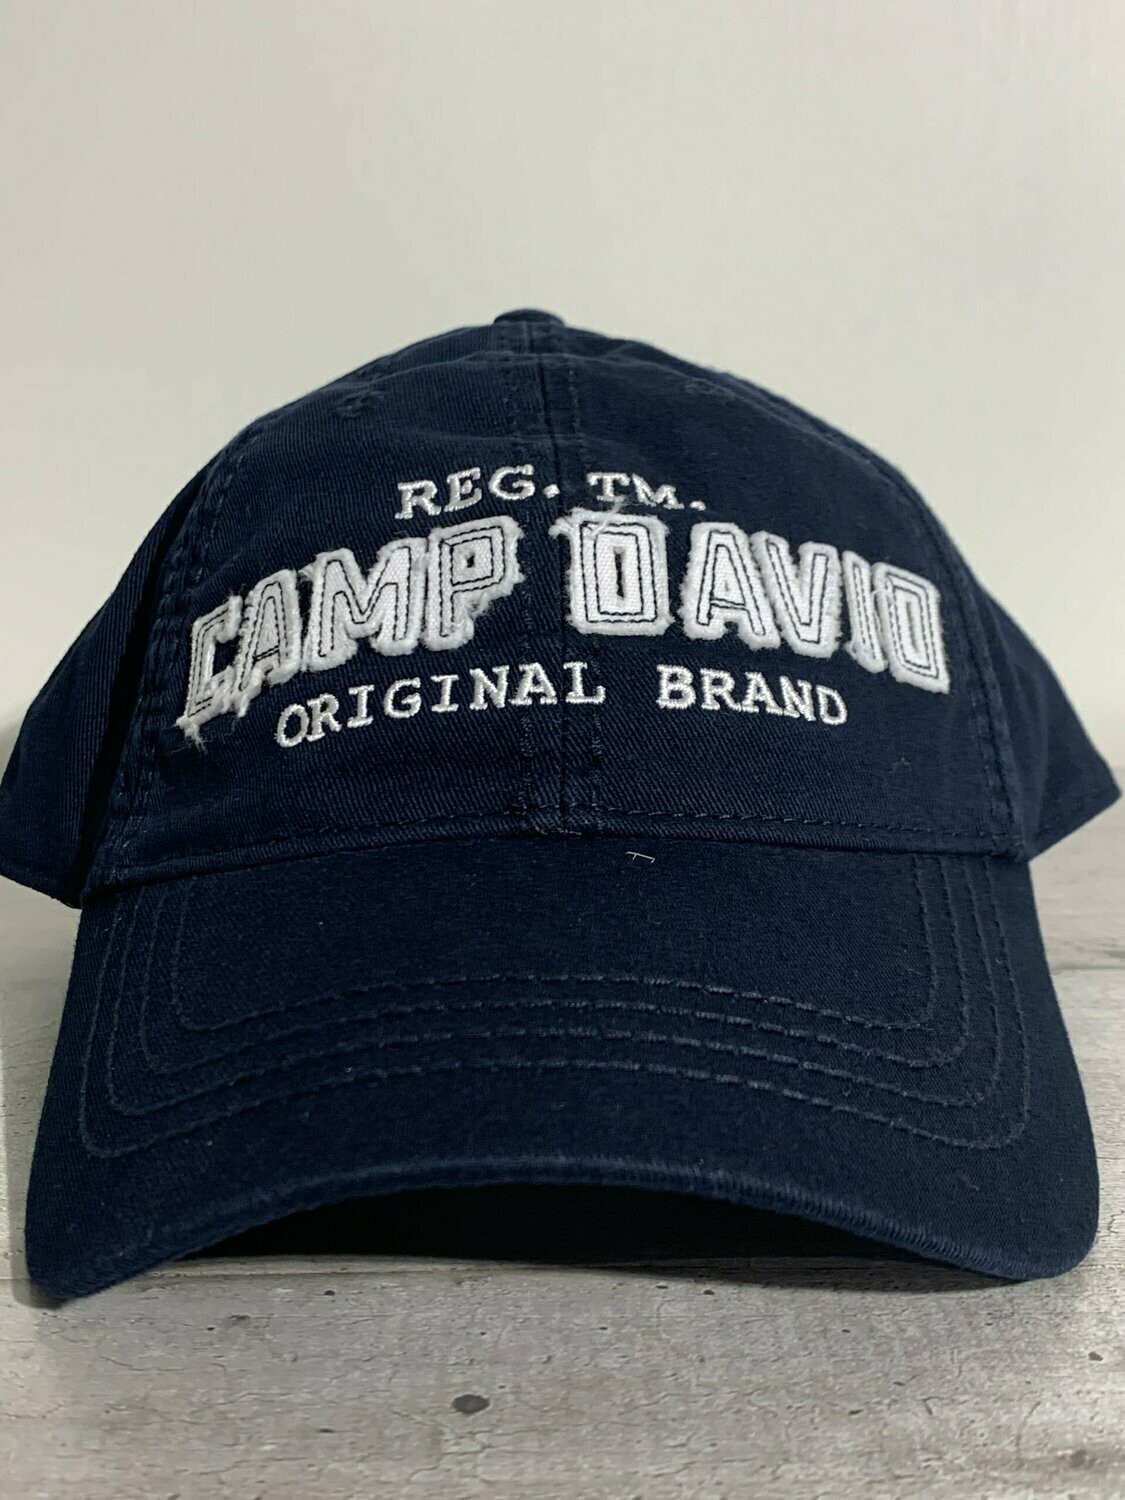 Cap - blau marine - Camp David